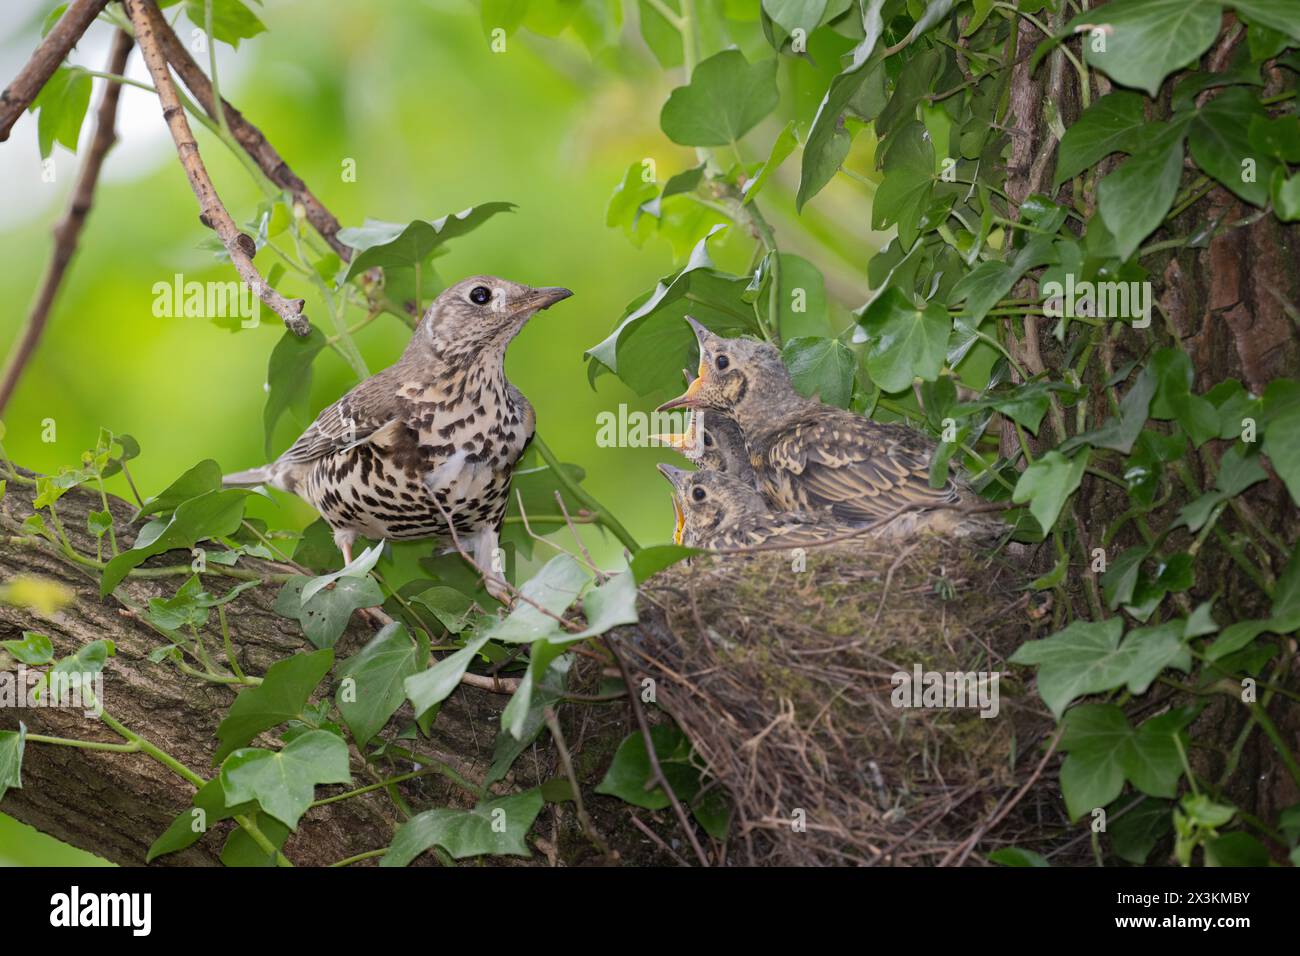 Adult Mistle Thrush, Turdus viscivorus, perched at nest with chicks, Queen's Park, London, United Kingdom Stock Photo